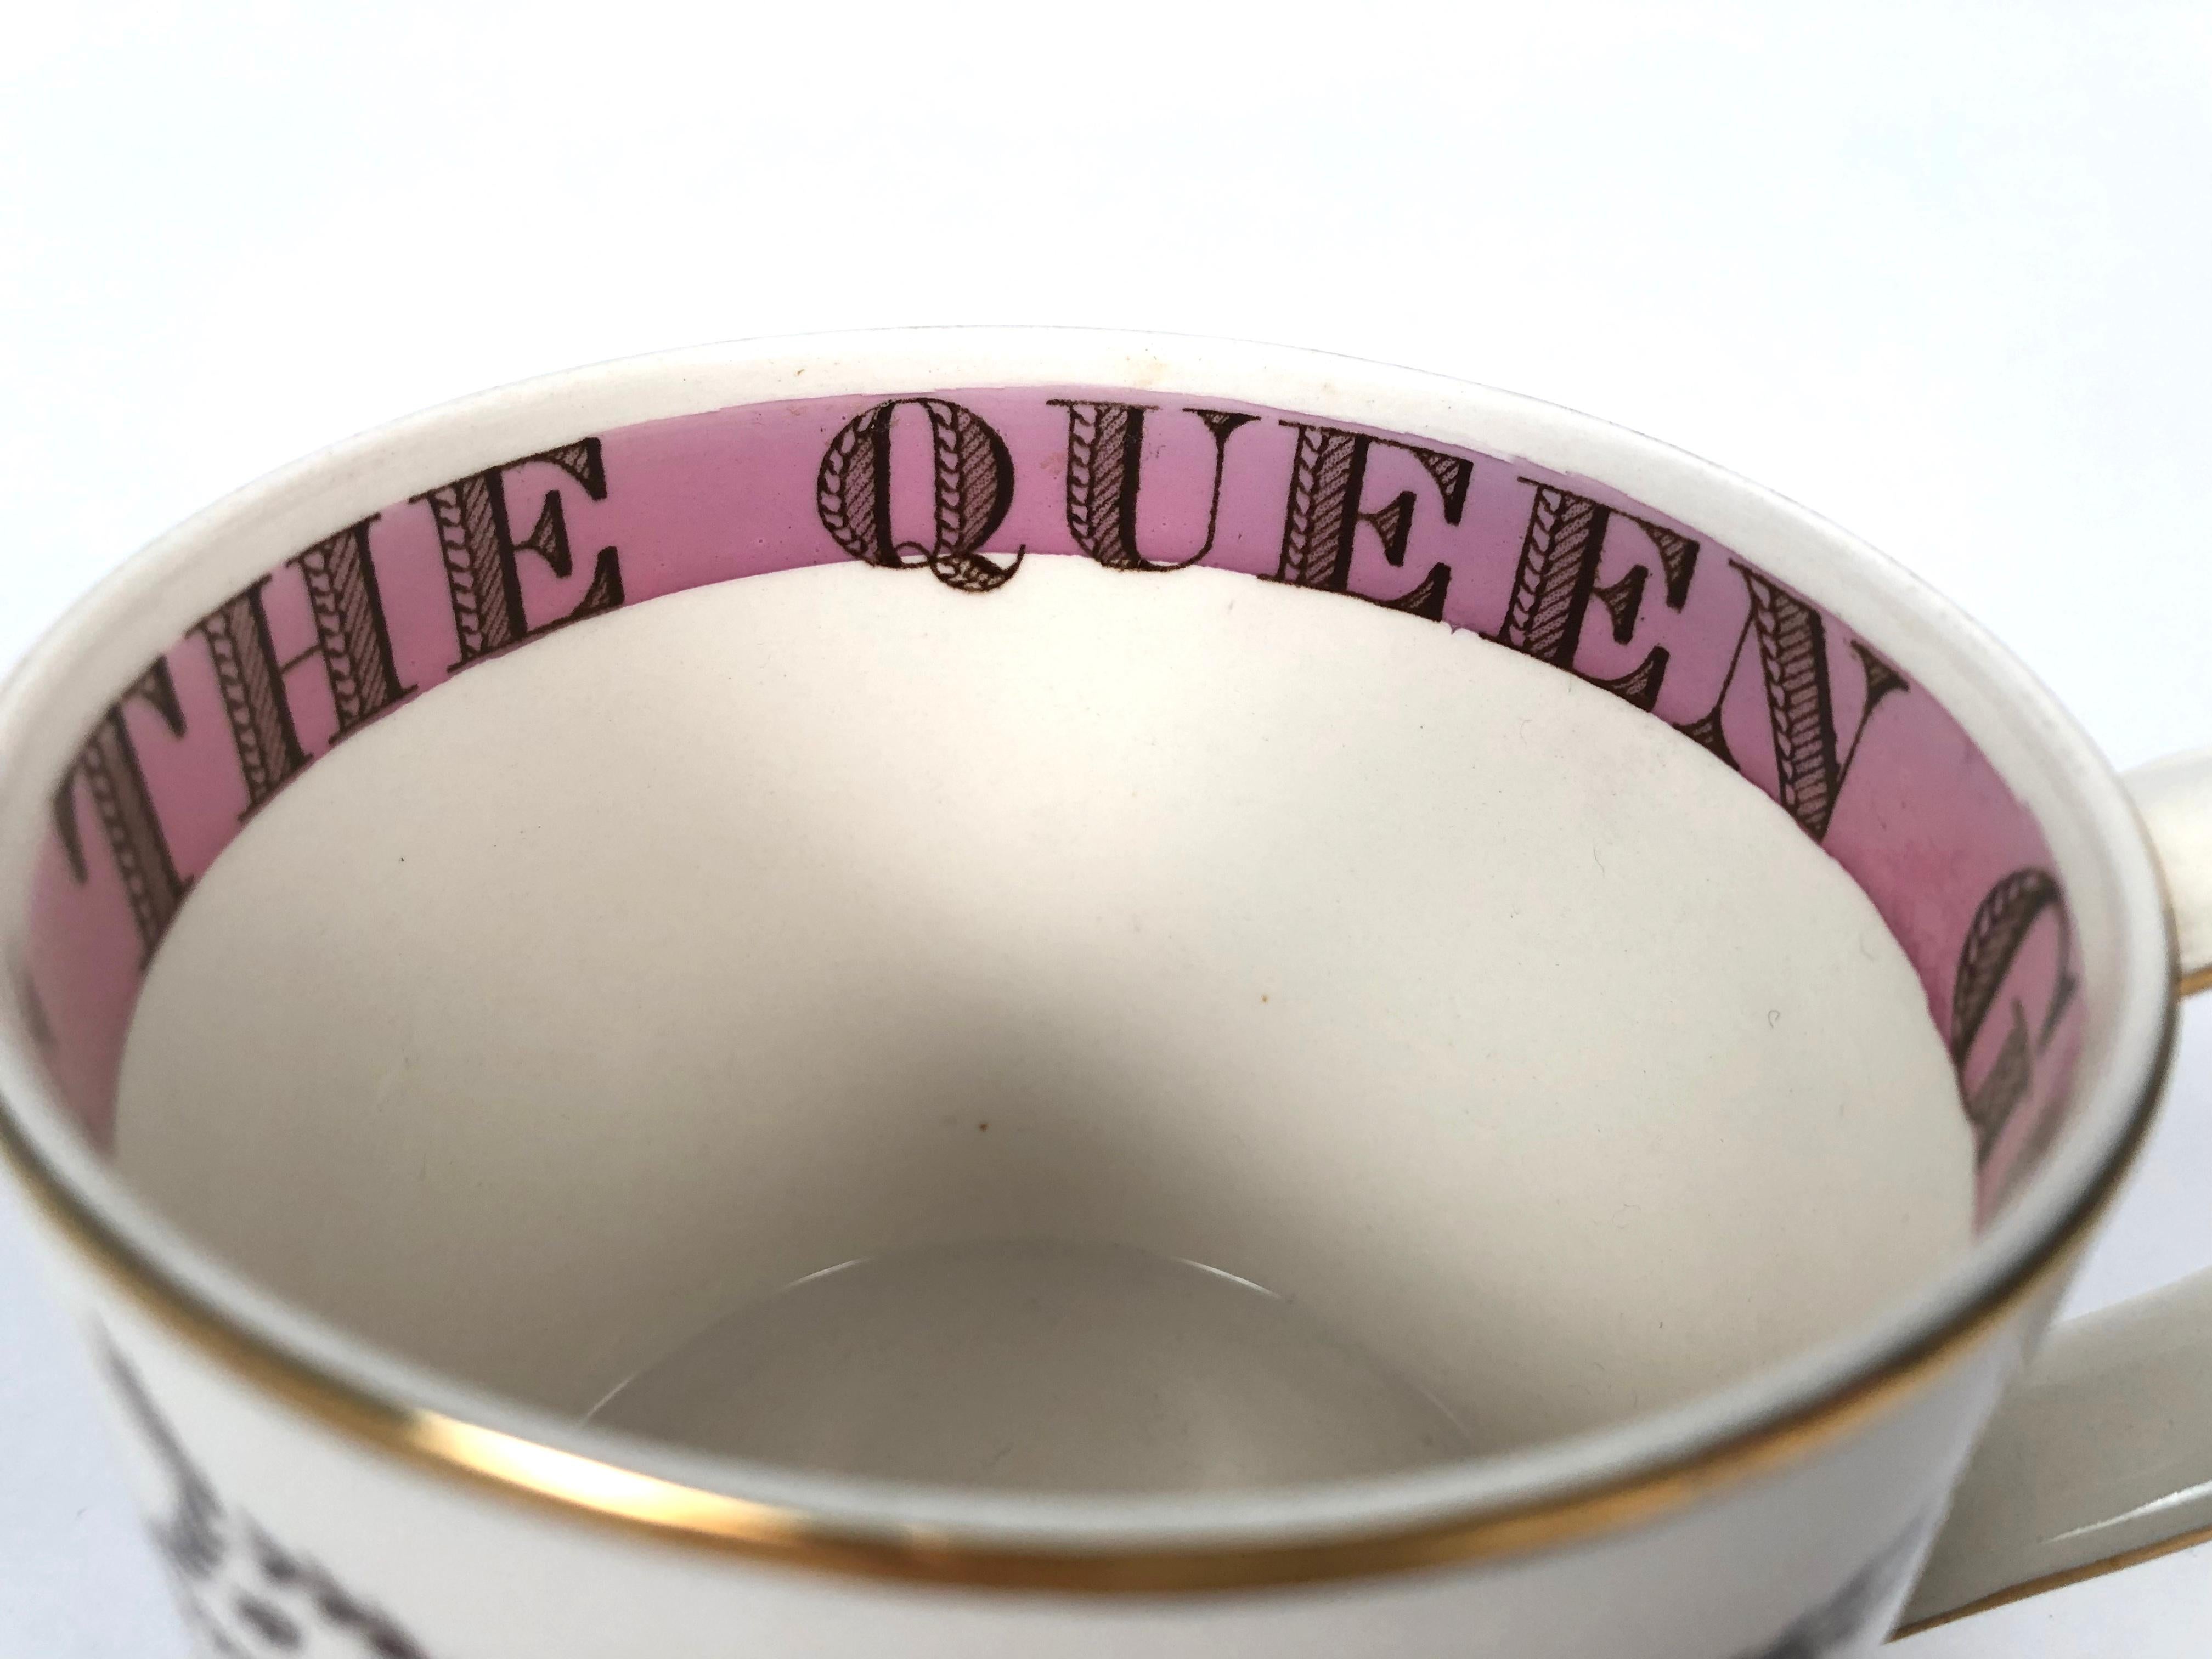 Mid-20th Century Queen Elizabeth II Commemorative Coronation Mug by Richard Guyatt for Wedgwood